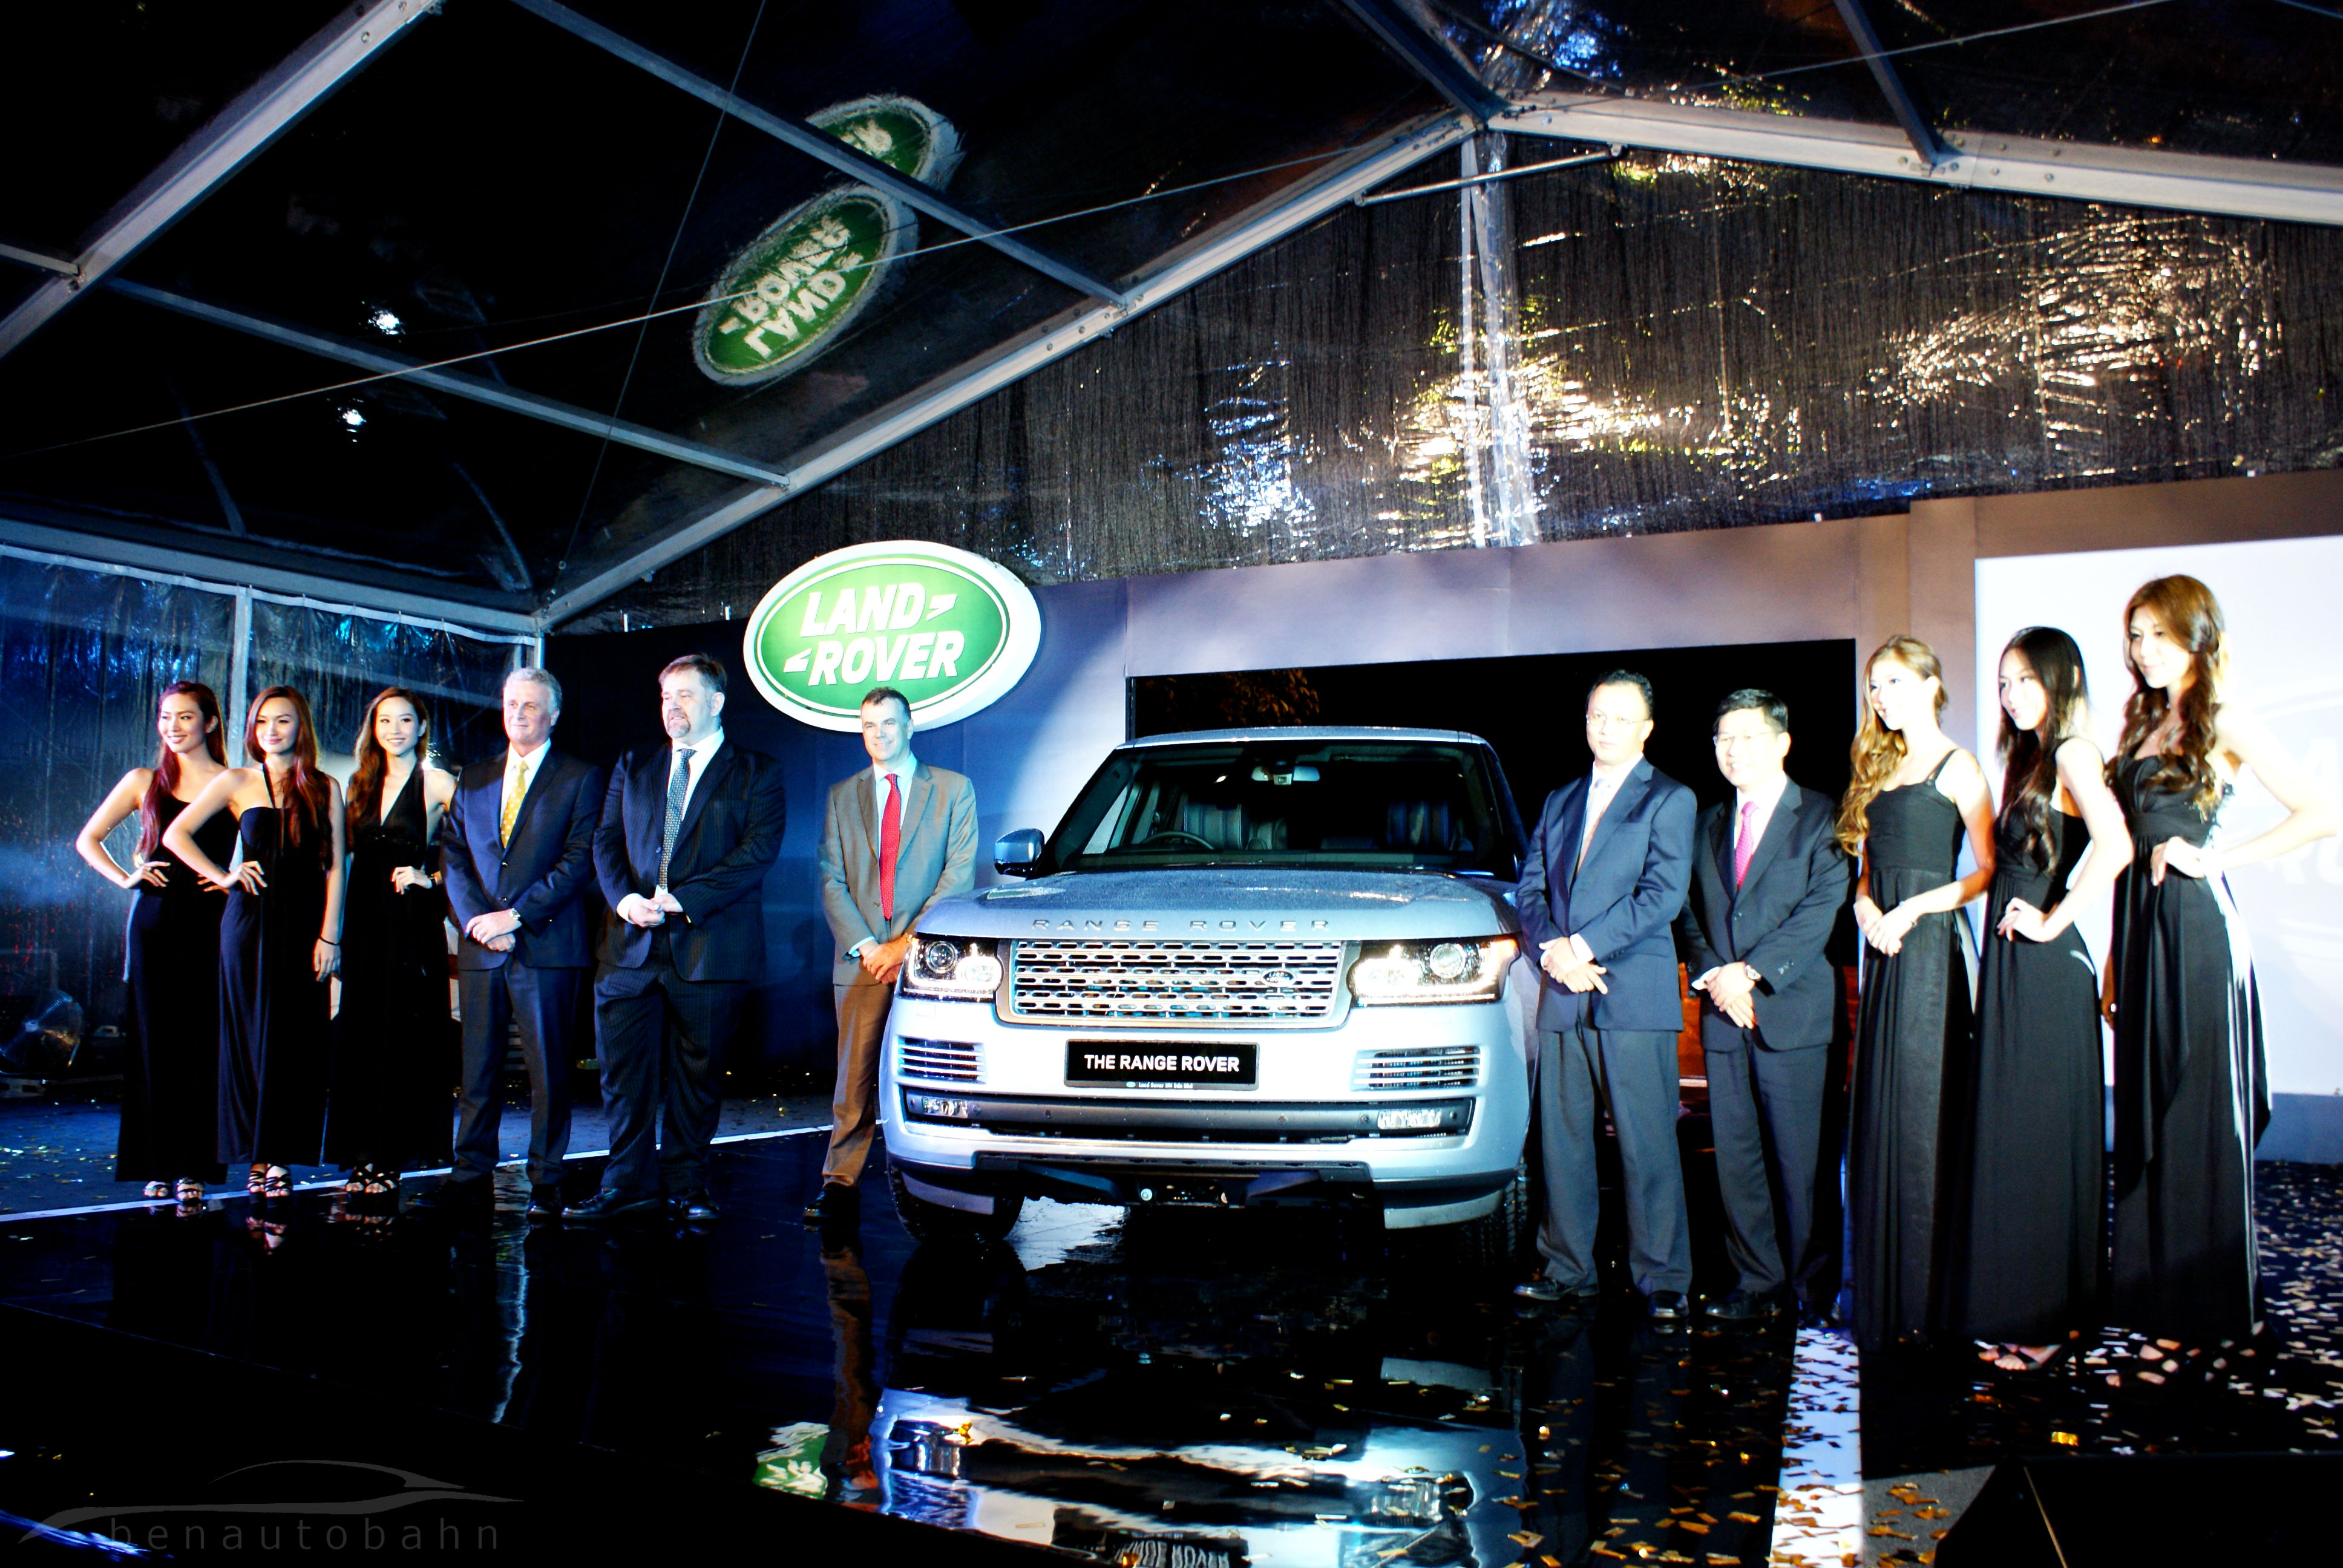 Range Rover media launch event